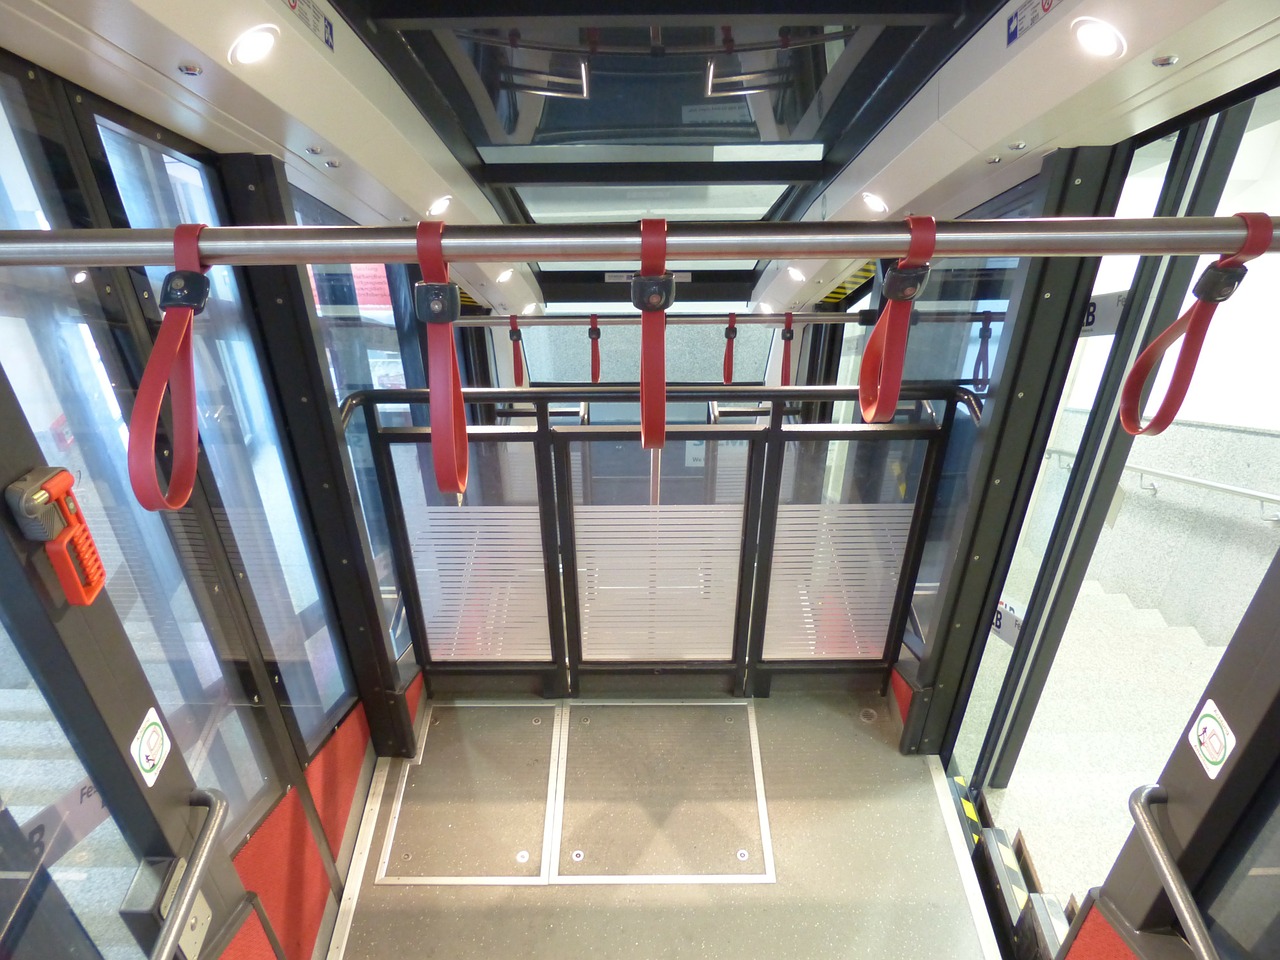 funicular railway train interior free photo